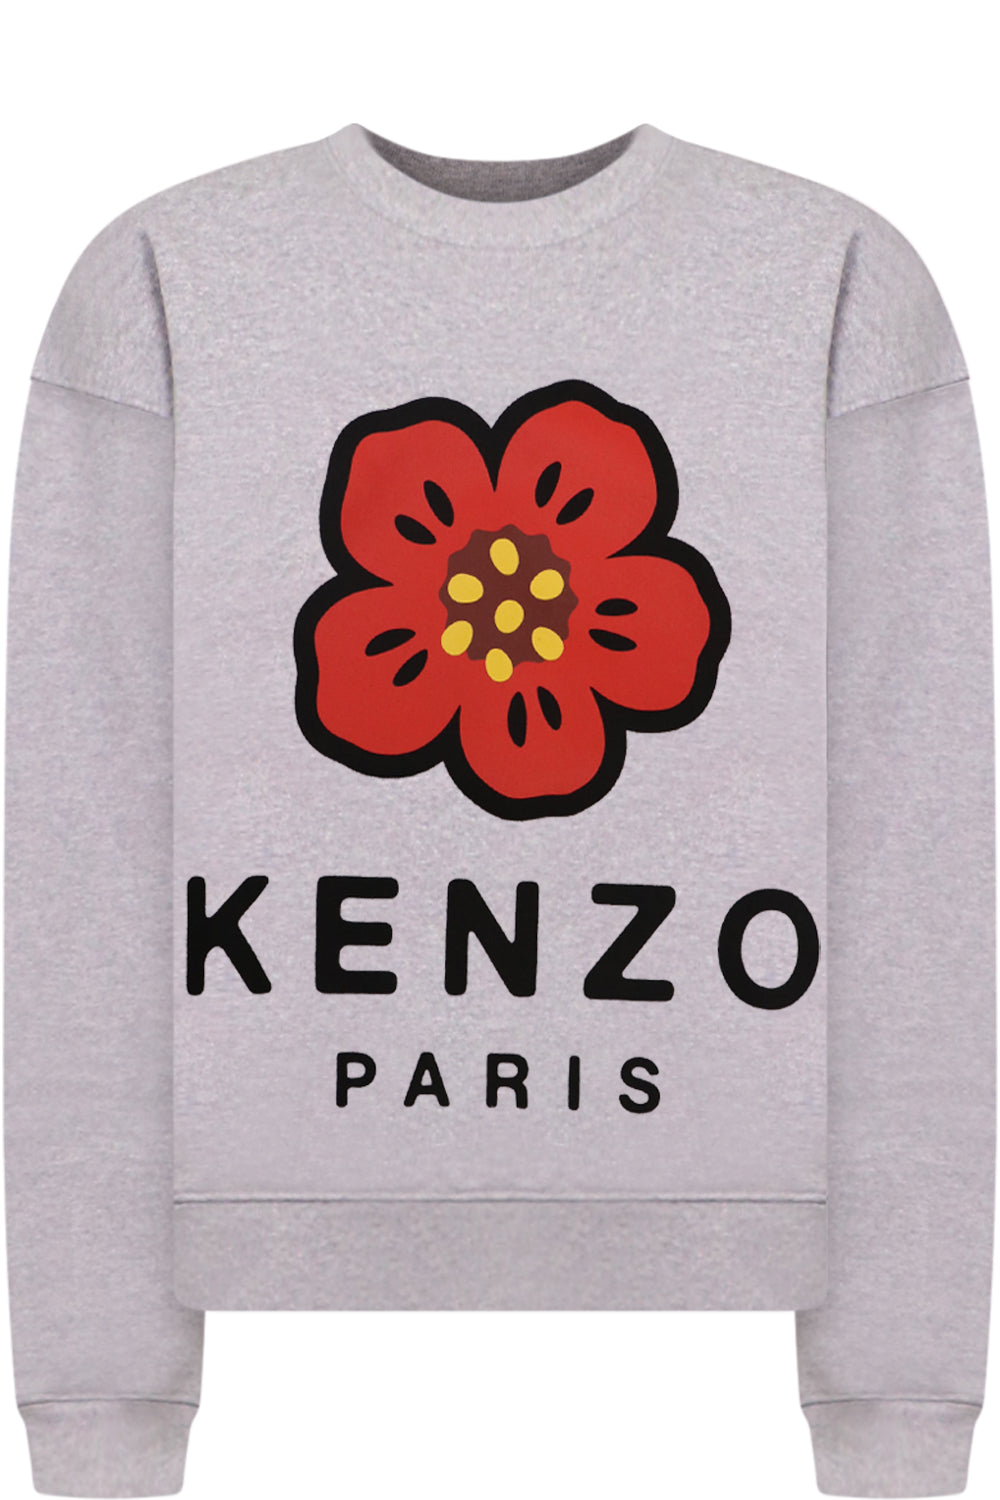 KENZO RTW KENZO PARIS REGULAR SWEATSHIRT | PEARL GREY